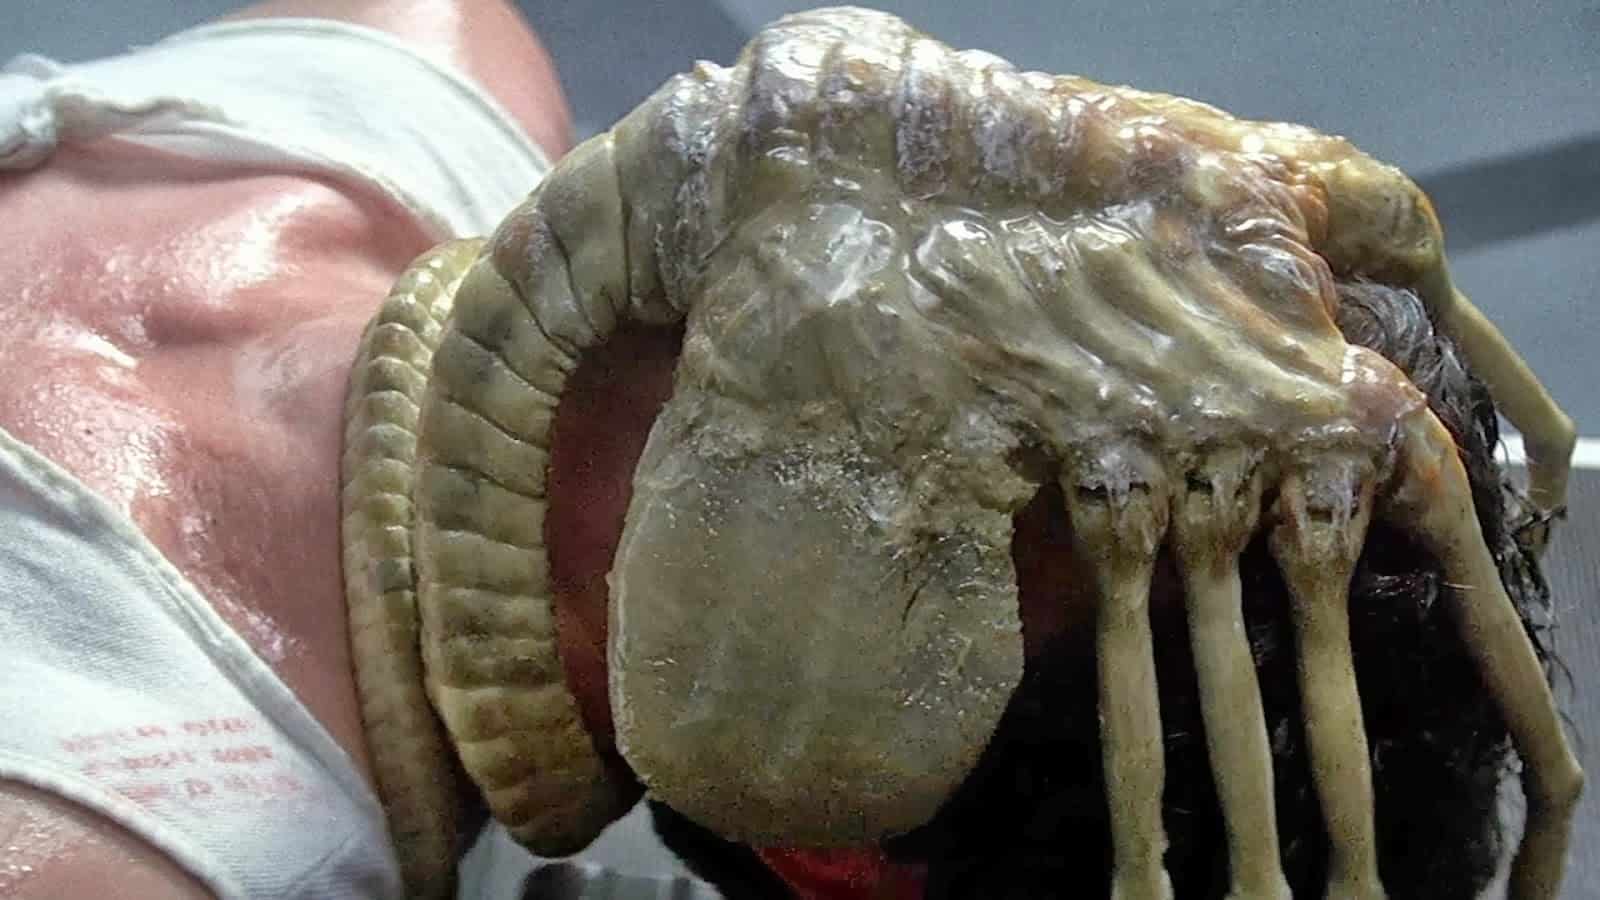 The Facehugger as seen in Alien